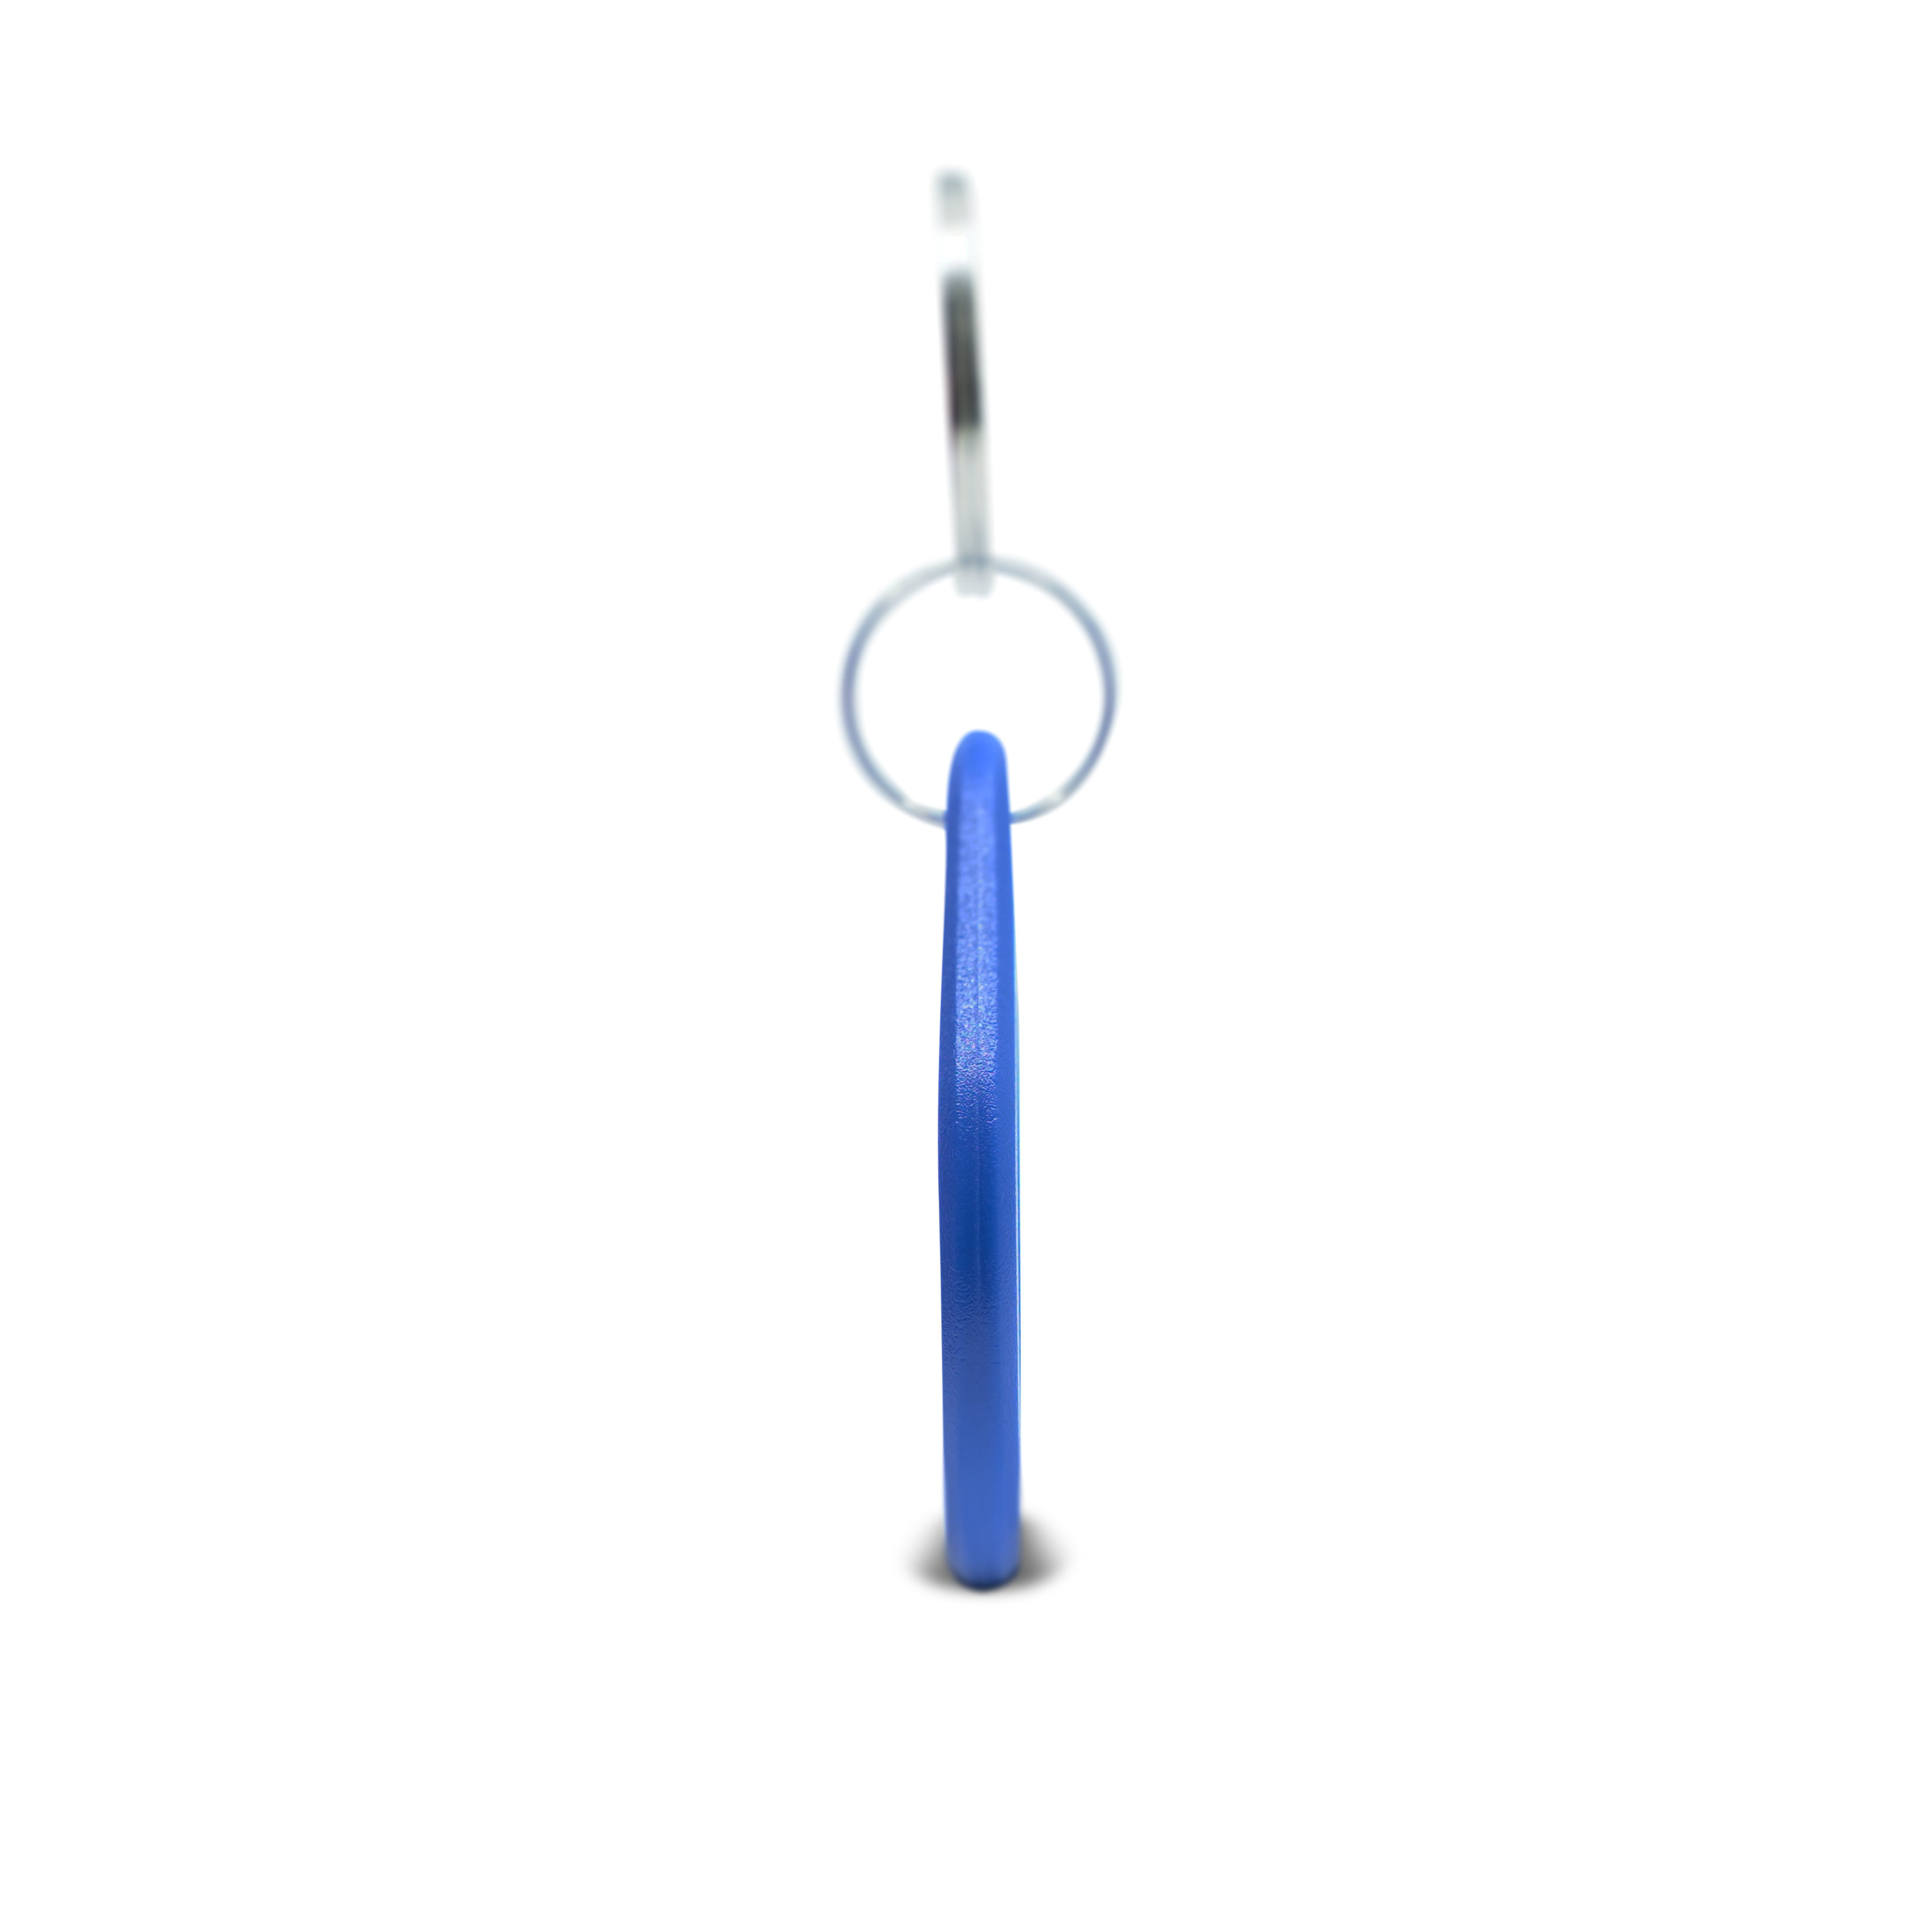 RFID Tag ABS - 40 x 32 mm - EM4200 - blue